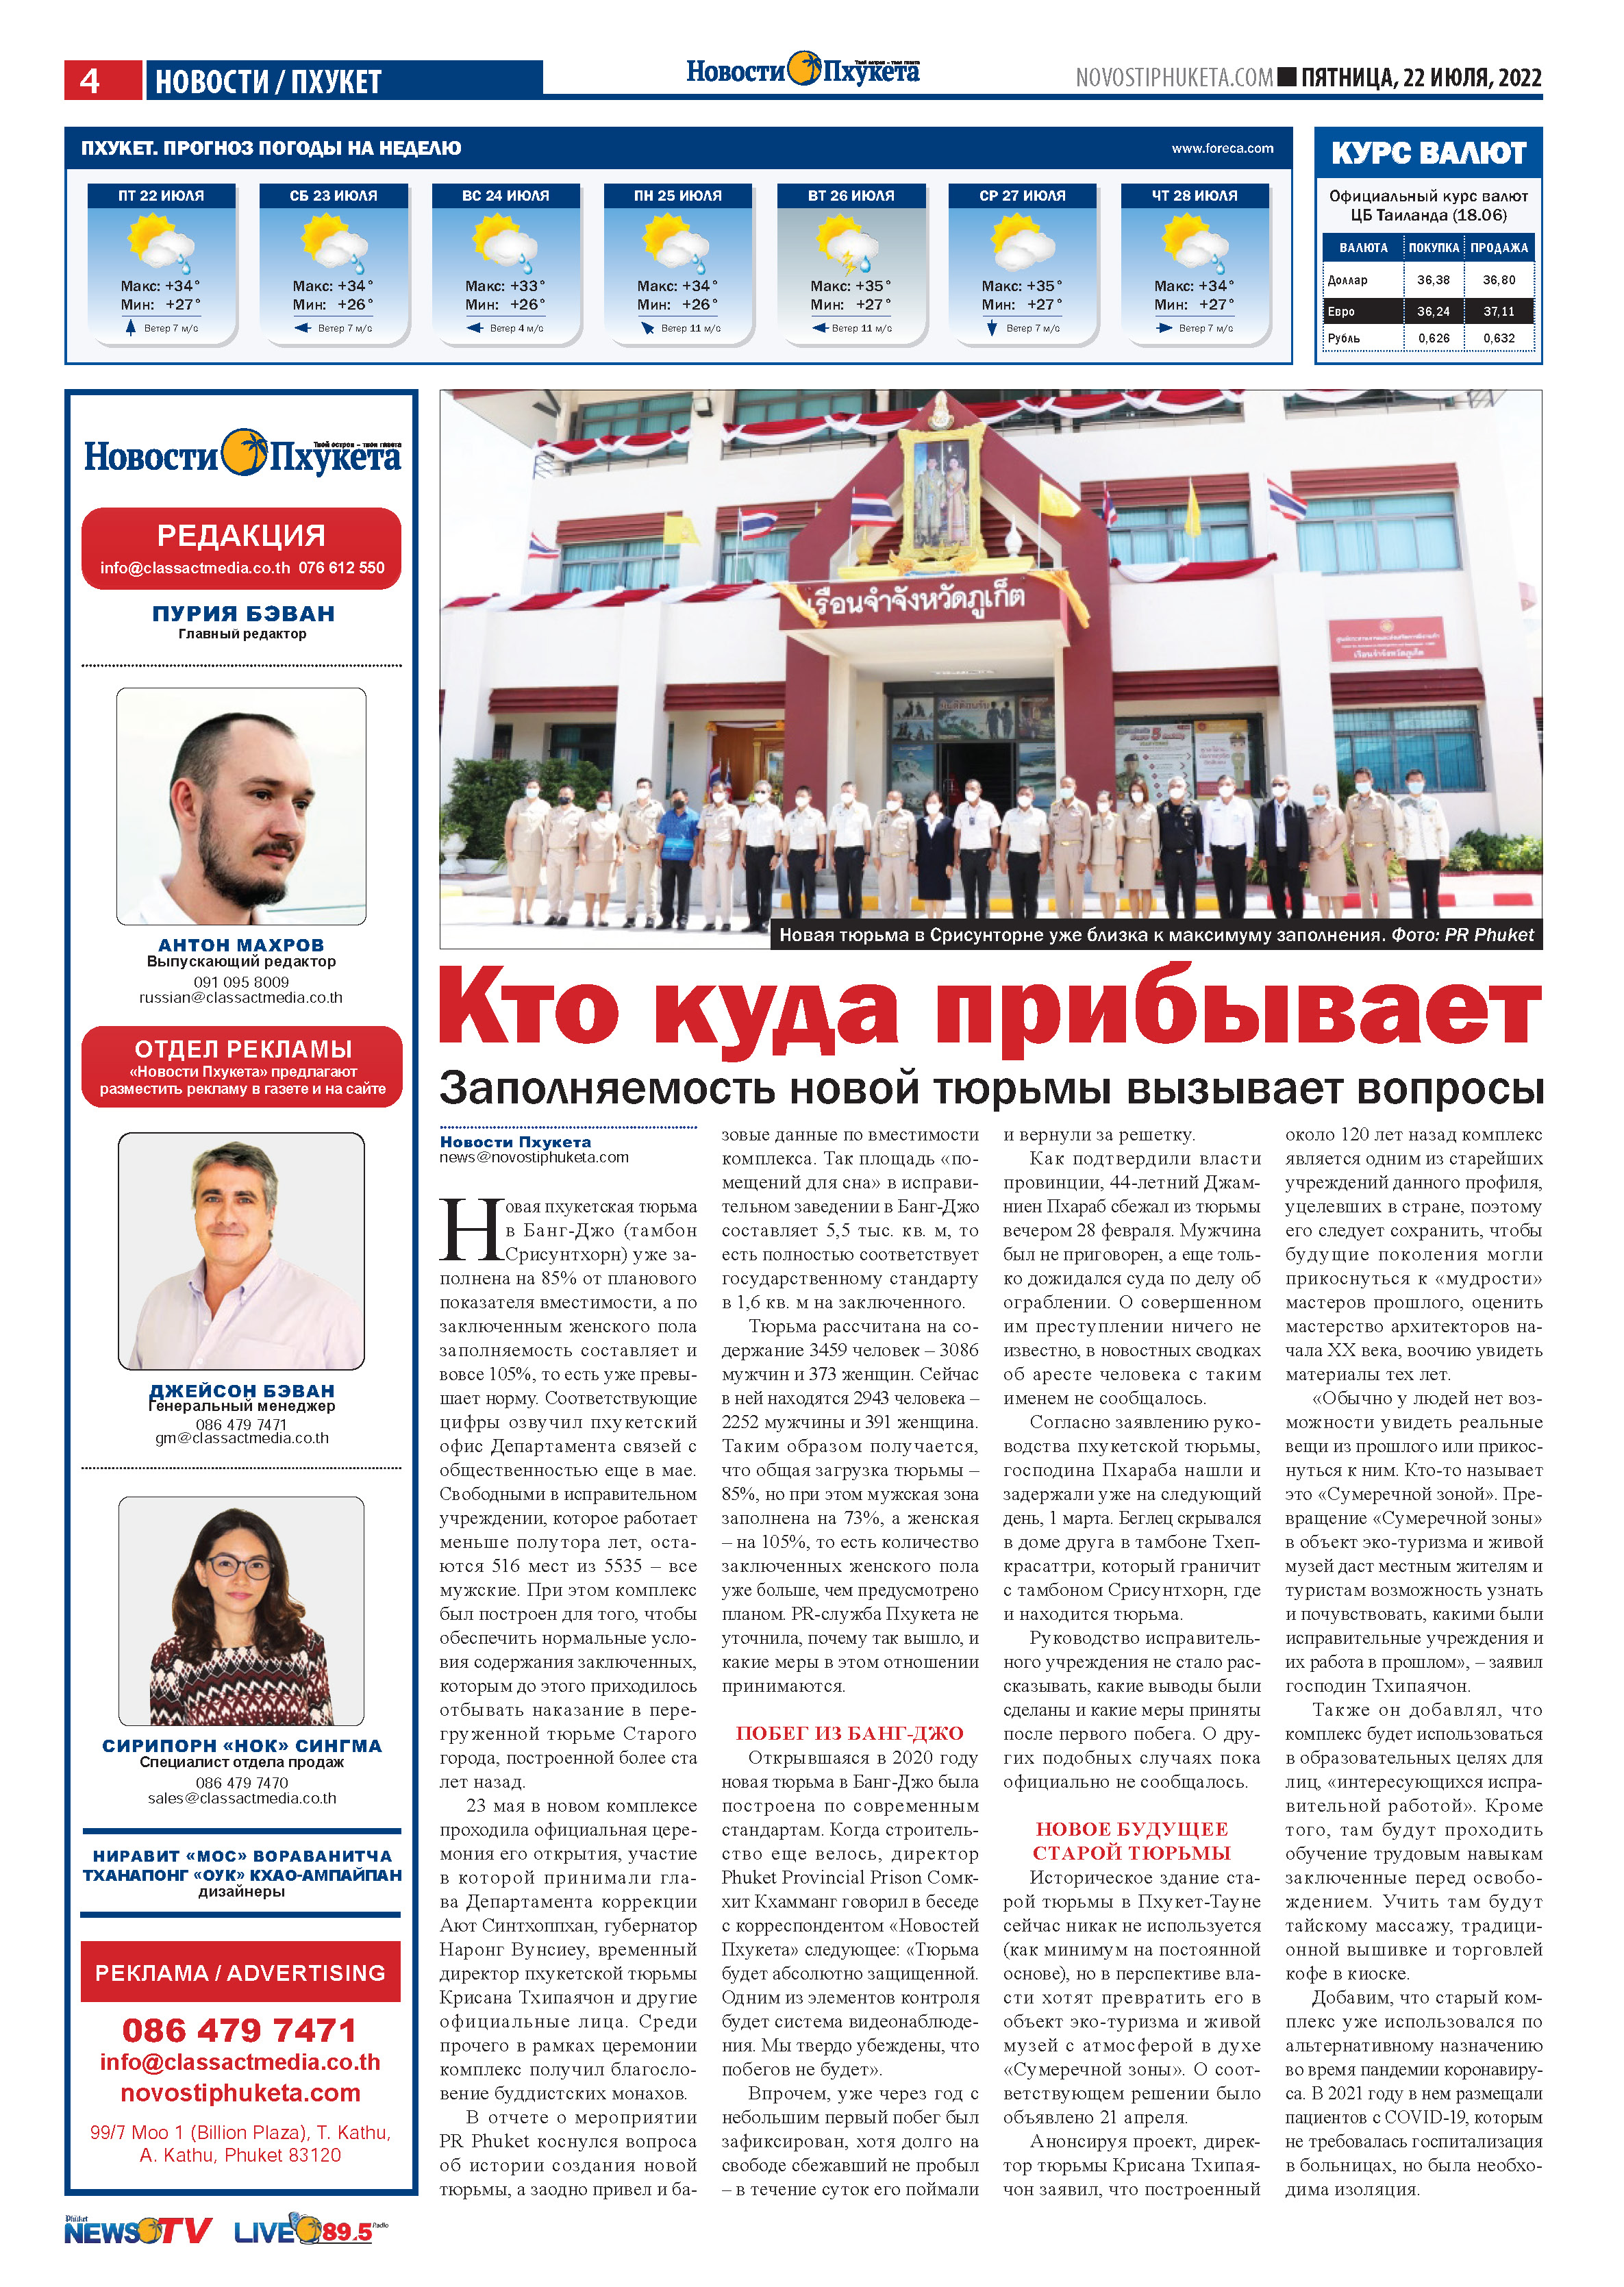 Phuket Newspaper - https://www.novostiphuketa.com/archive/22-07-2022/22-07-2022_Page_04.jpg